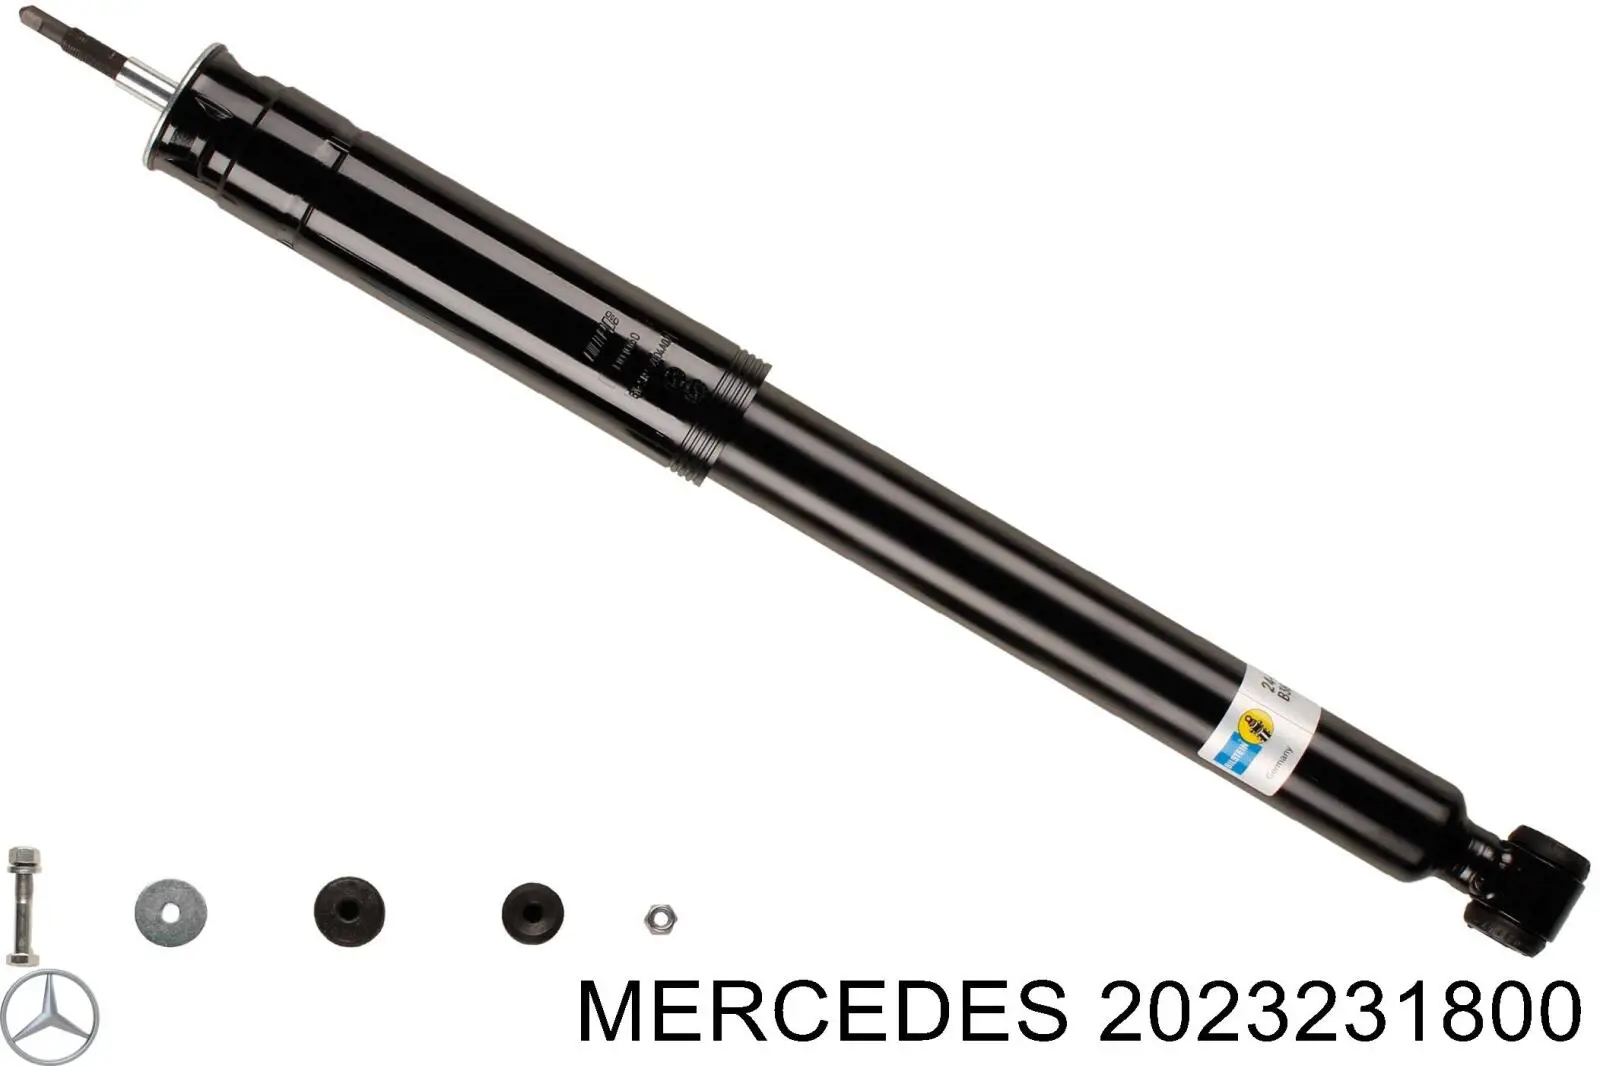 A2023231800 Mercedes 